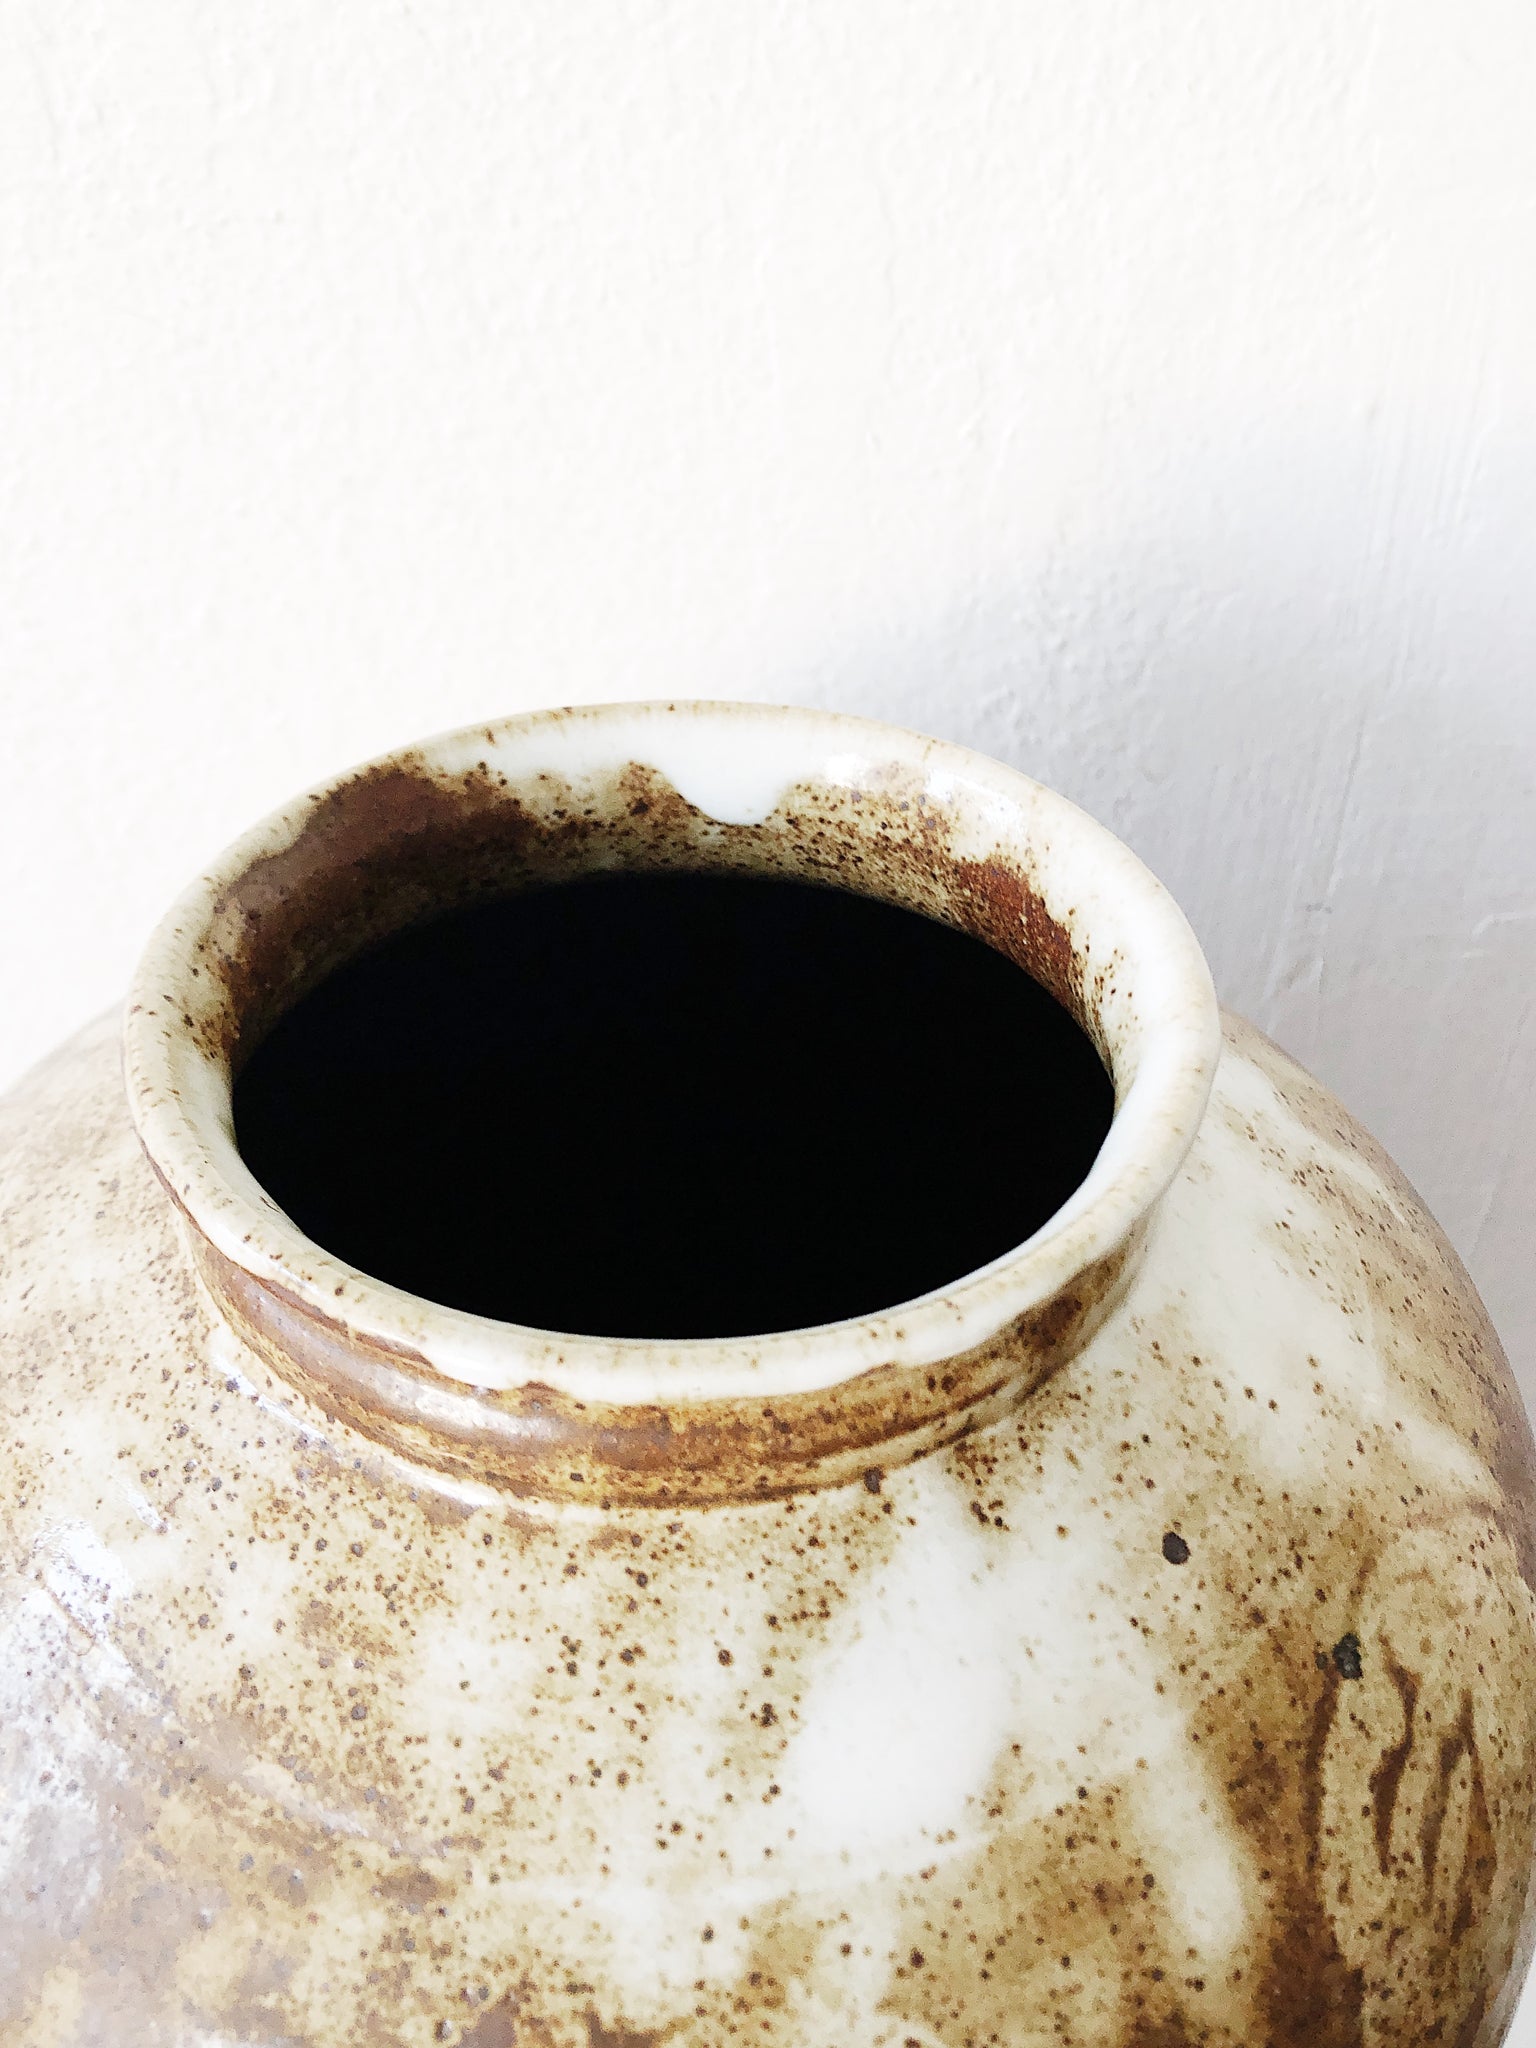 Vintage Handmade Figural Vase